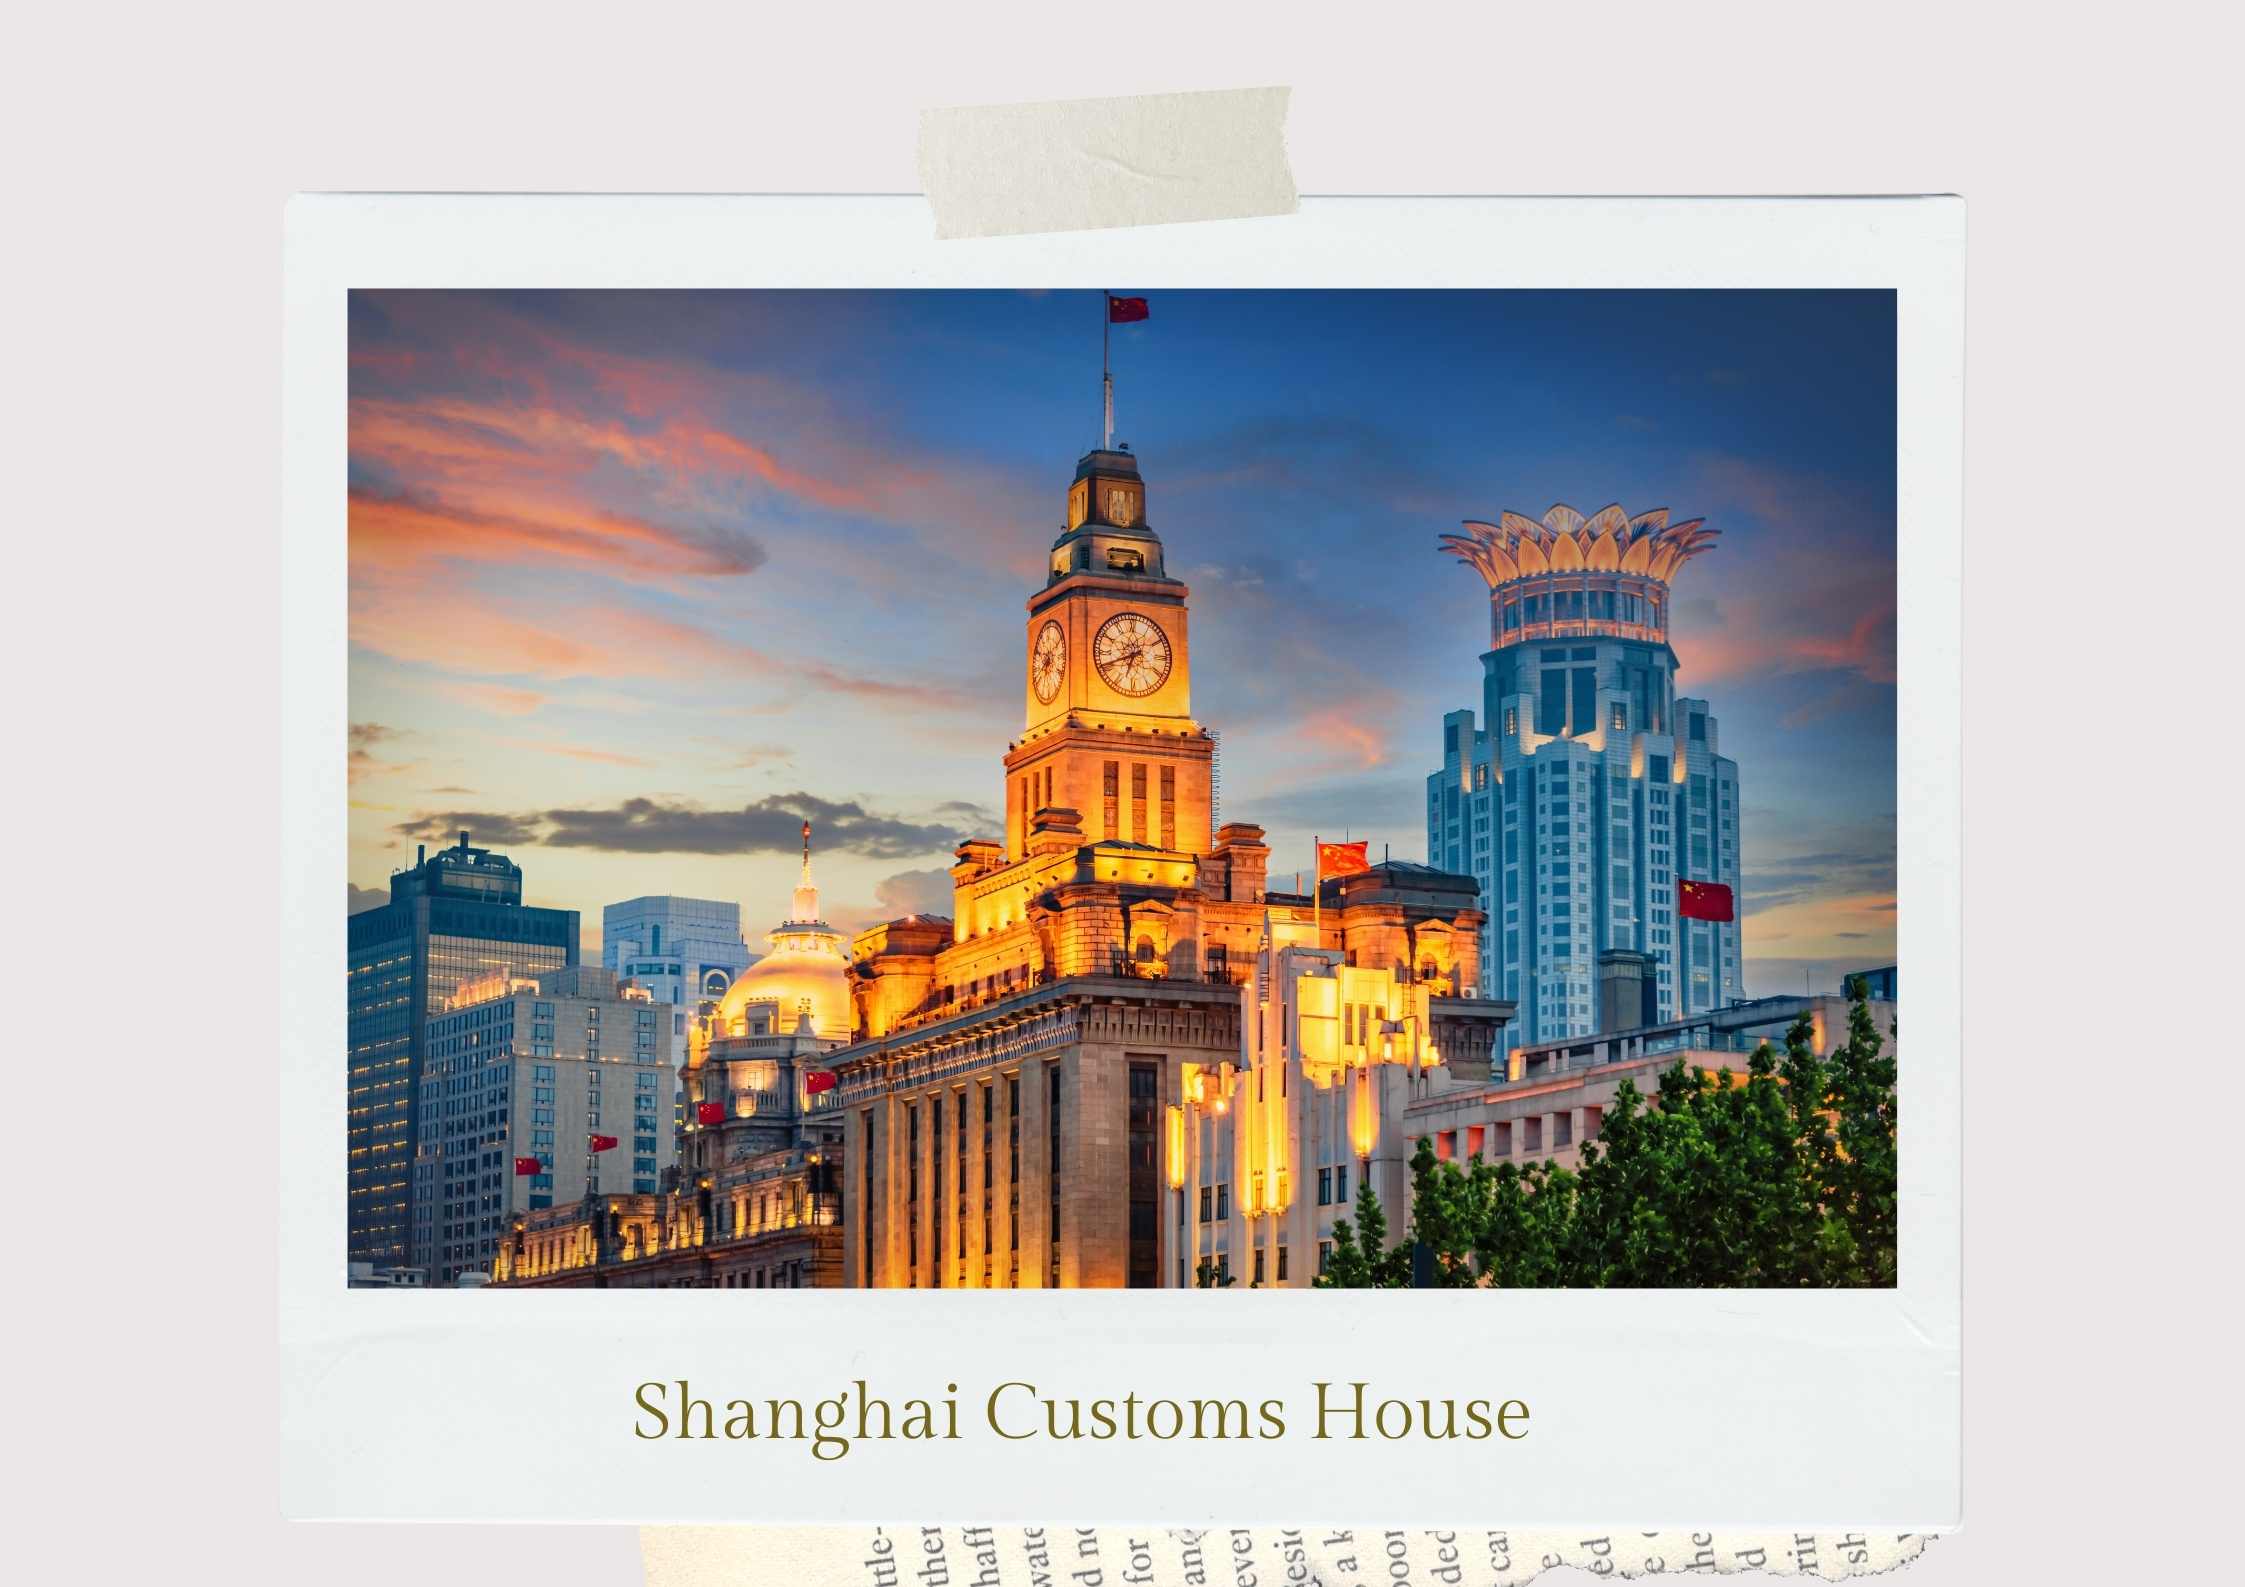 Shanghai Customs House night